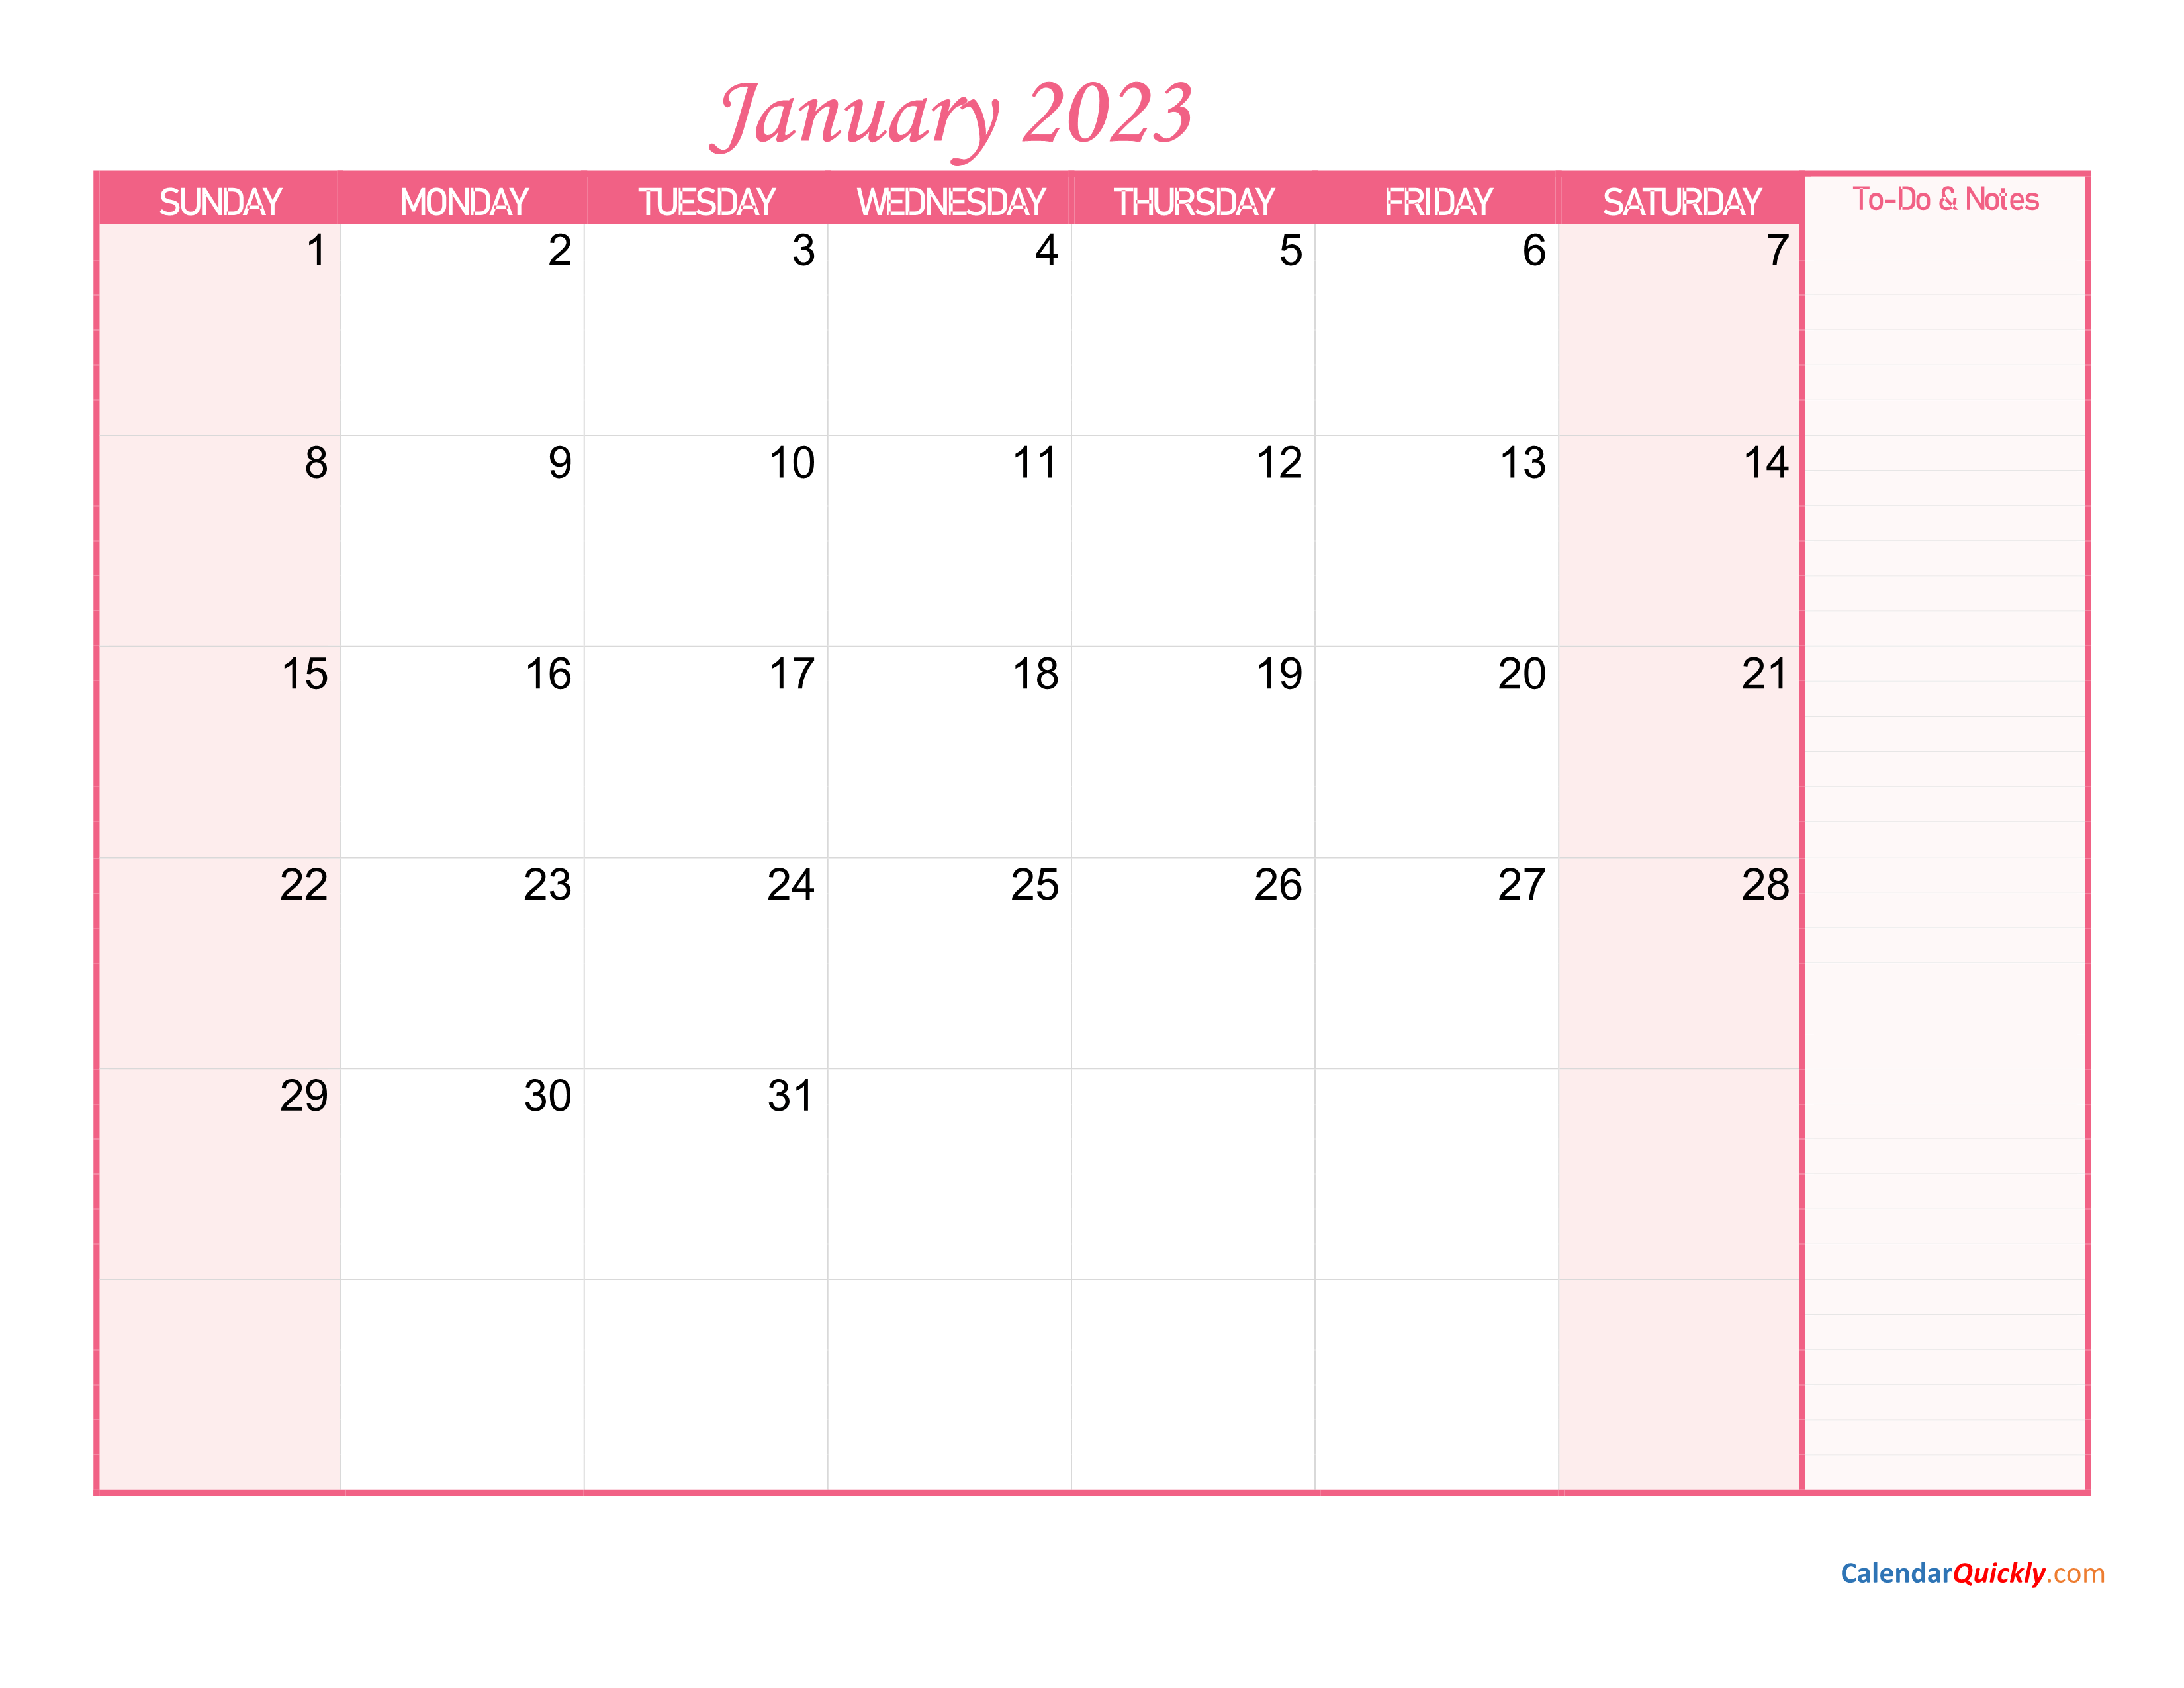 january-calendar-2023-with-notes-calendar-quickly